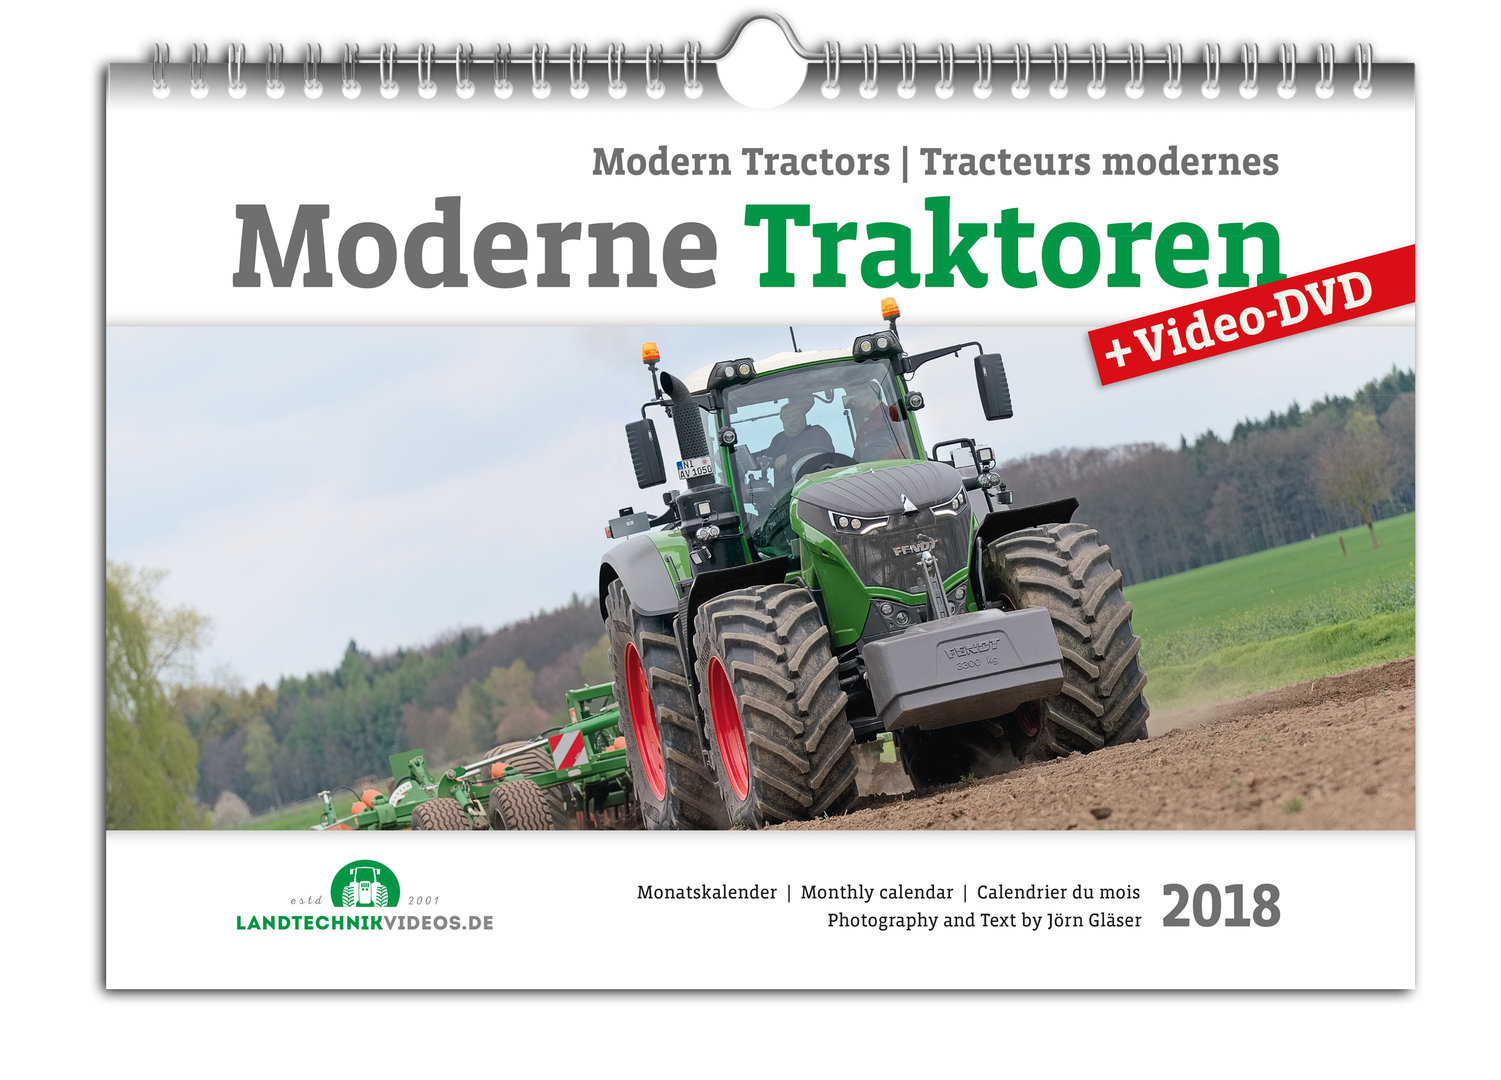 Modern Tractors Monthly Calendar 2018 + Video-DVD